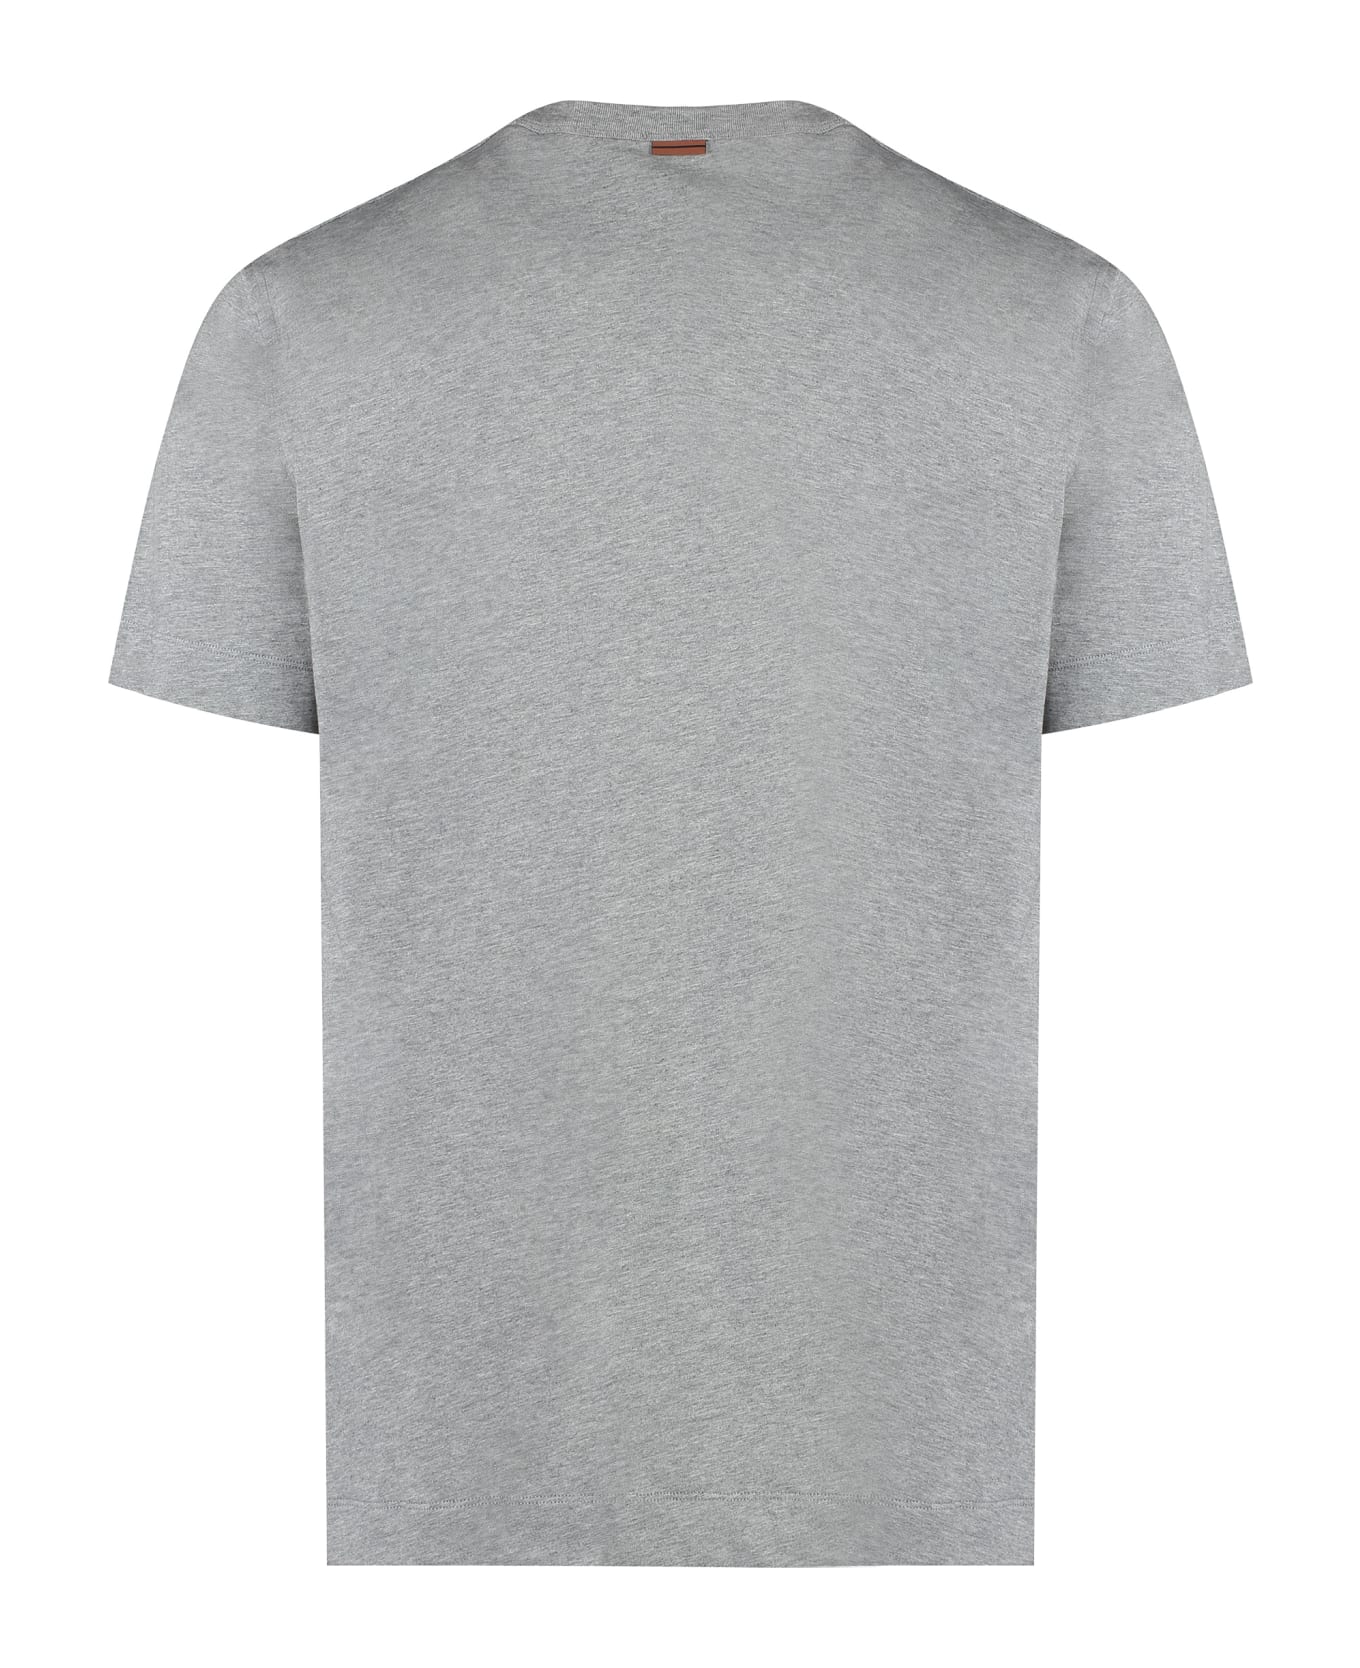 Zegna Logo Cotton T-shirt - grey